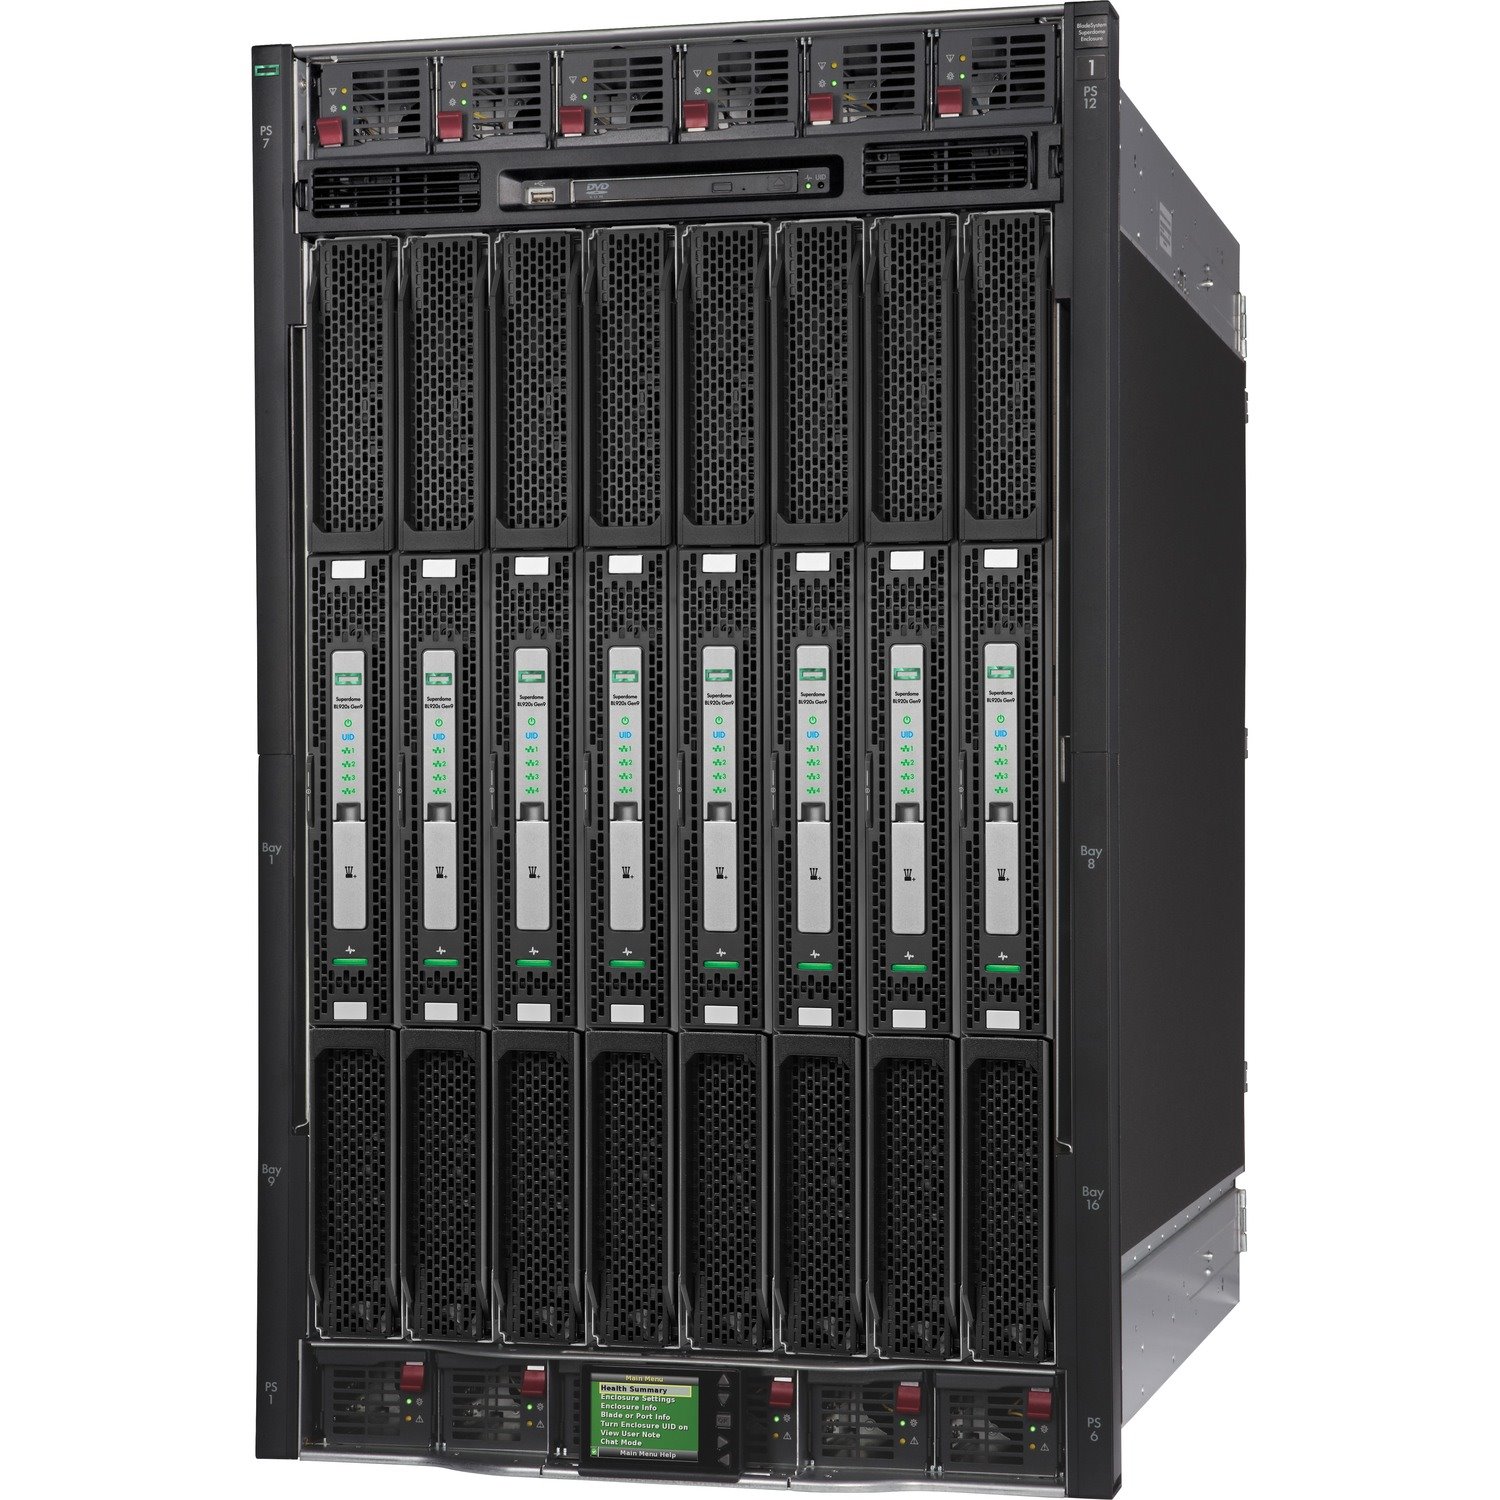 HPE Integrity Superdome X BL920s G9 Blade Server - Intel Xeon E7-8891 v4 2.80 GHz